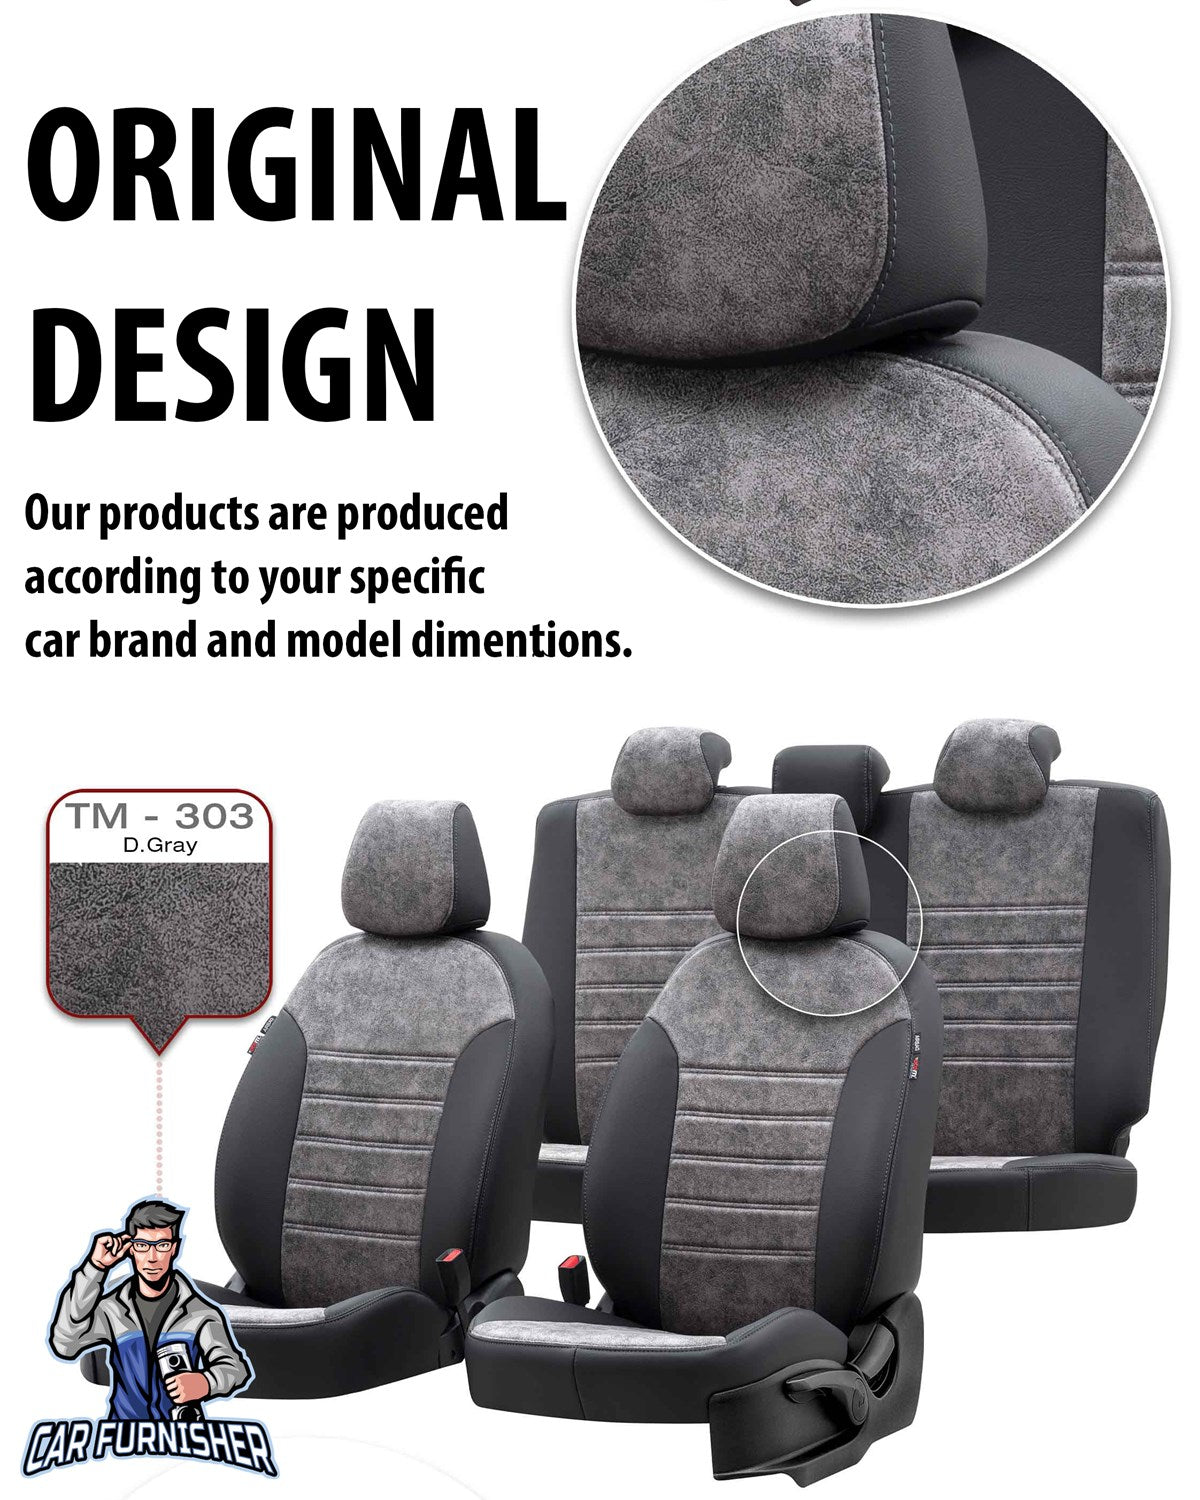 Skoda Rapid Seat Covers Milano Suede Design Burgundy Leather & Suede Fabric